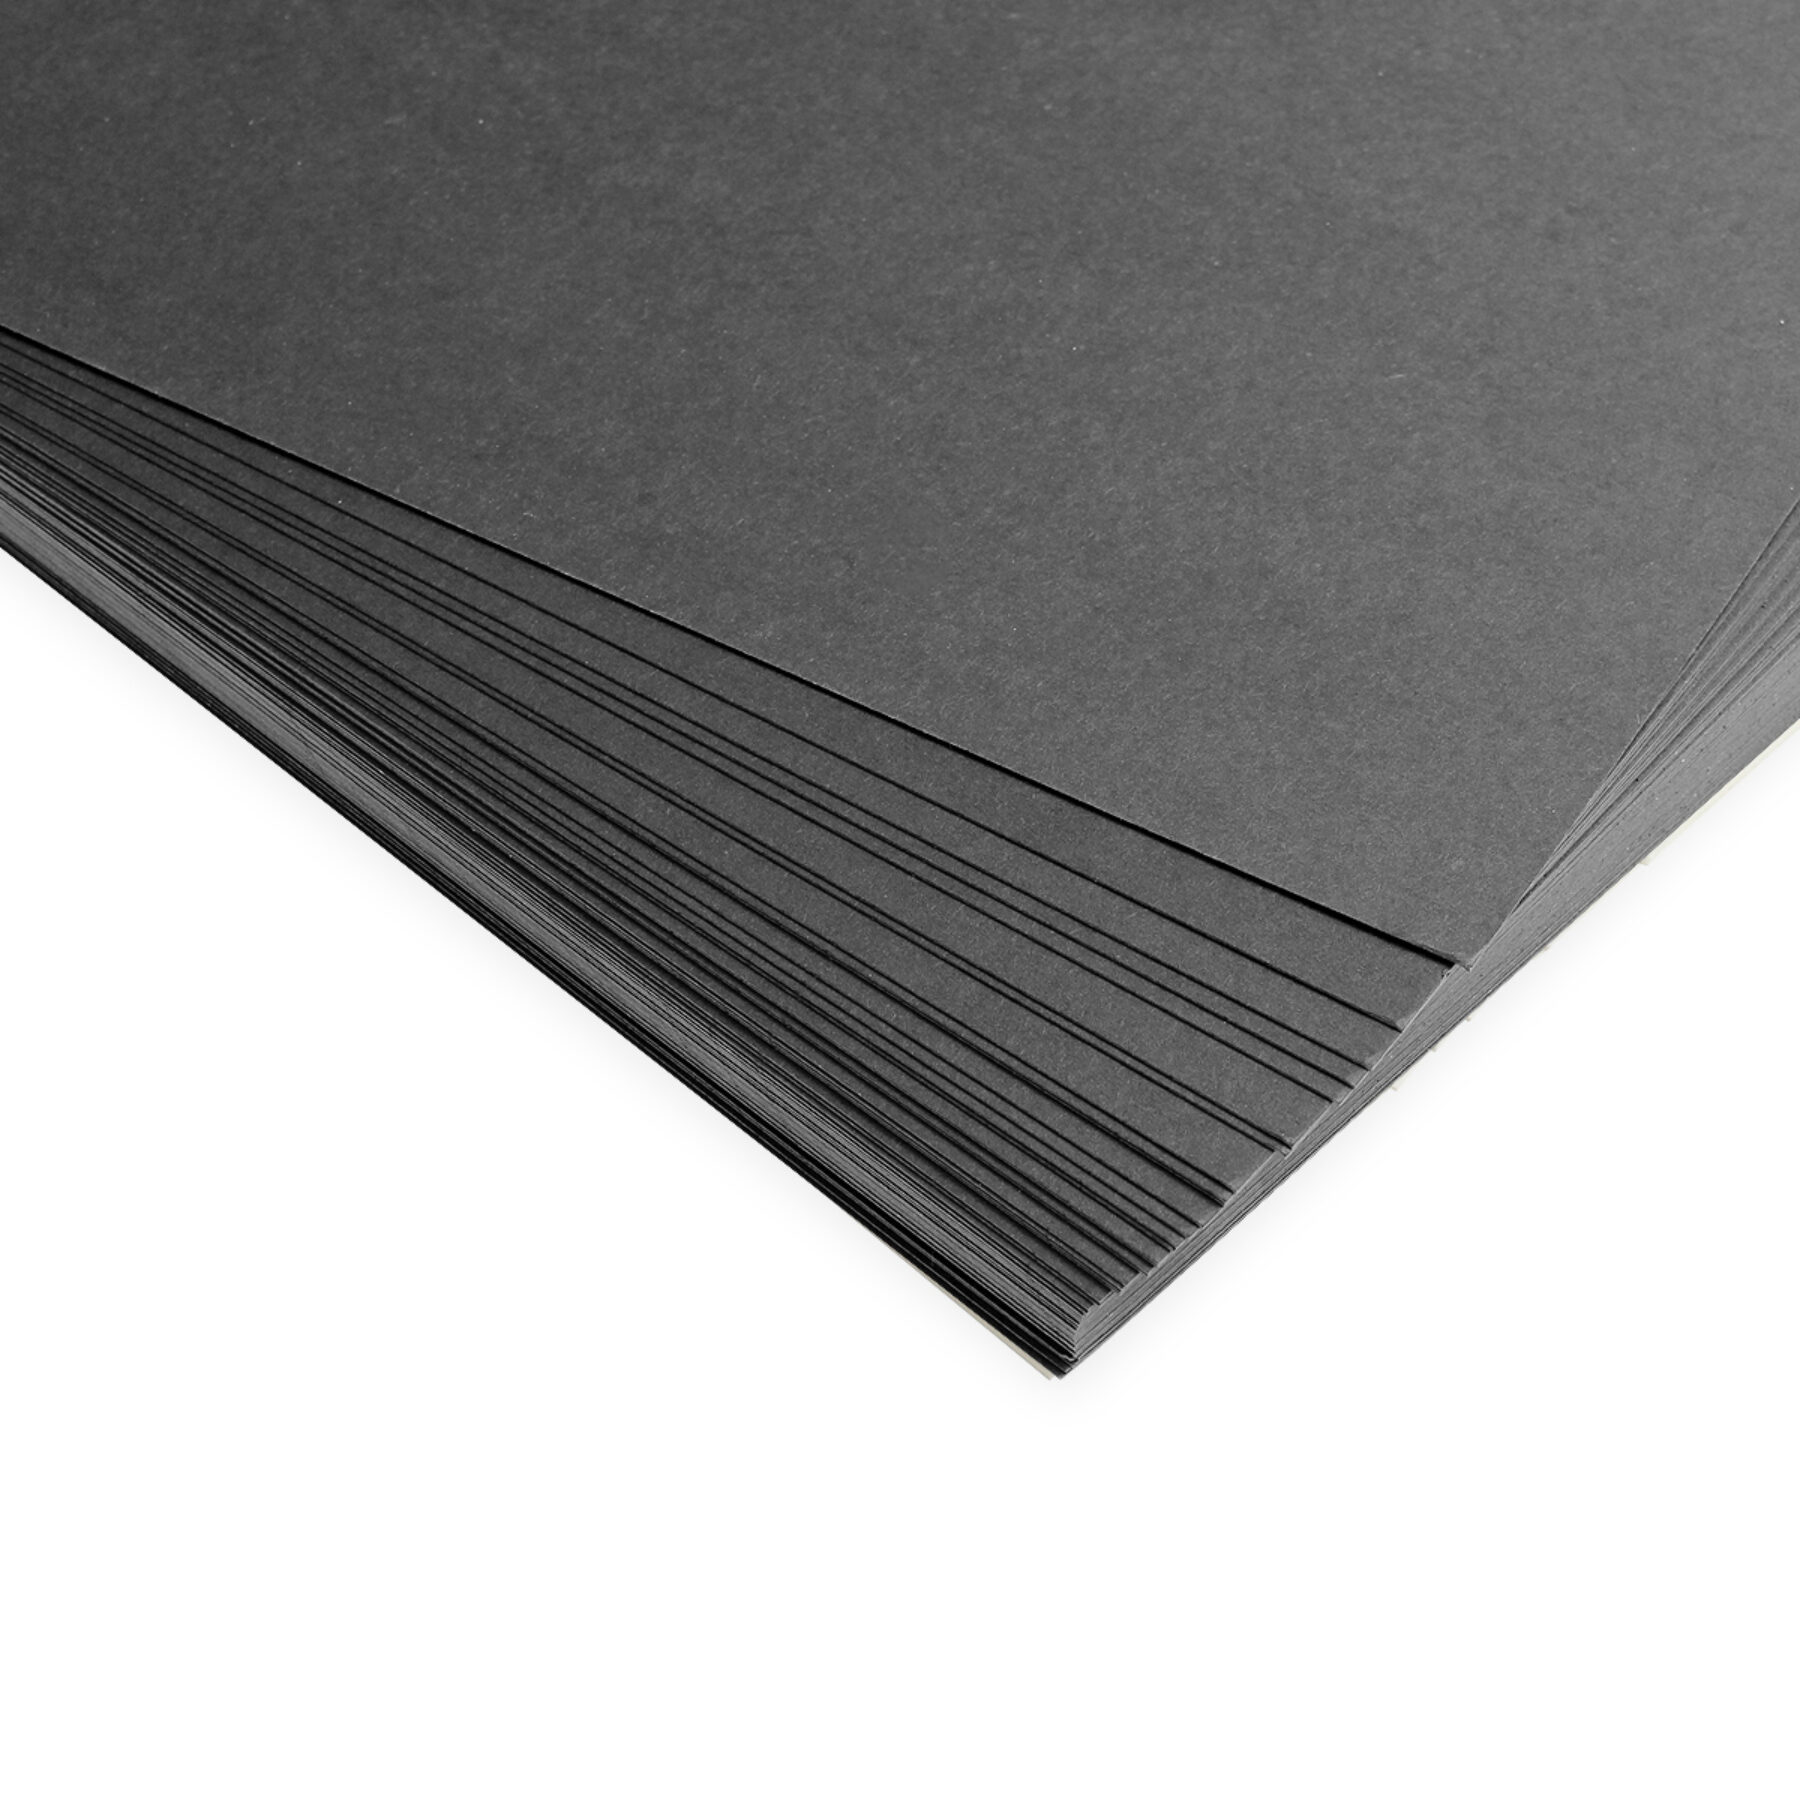 A7 Black Card (50 Sheets)